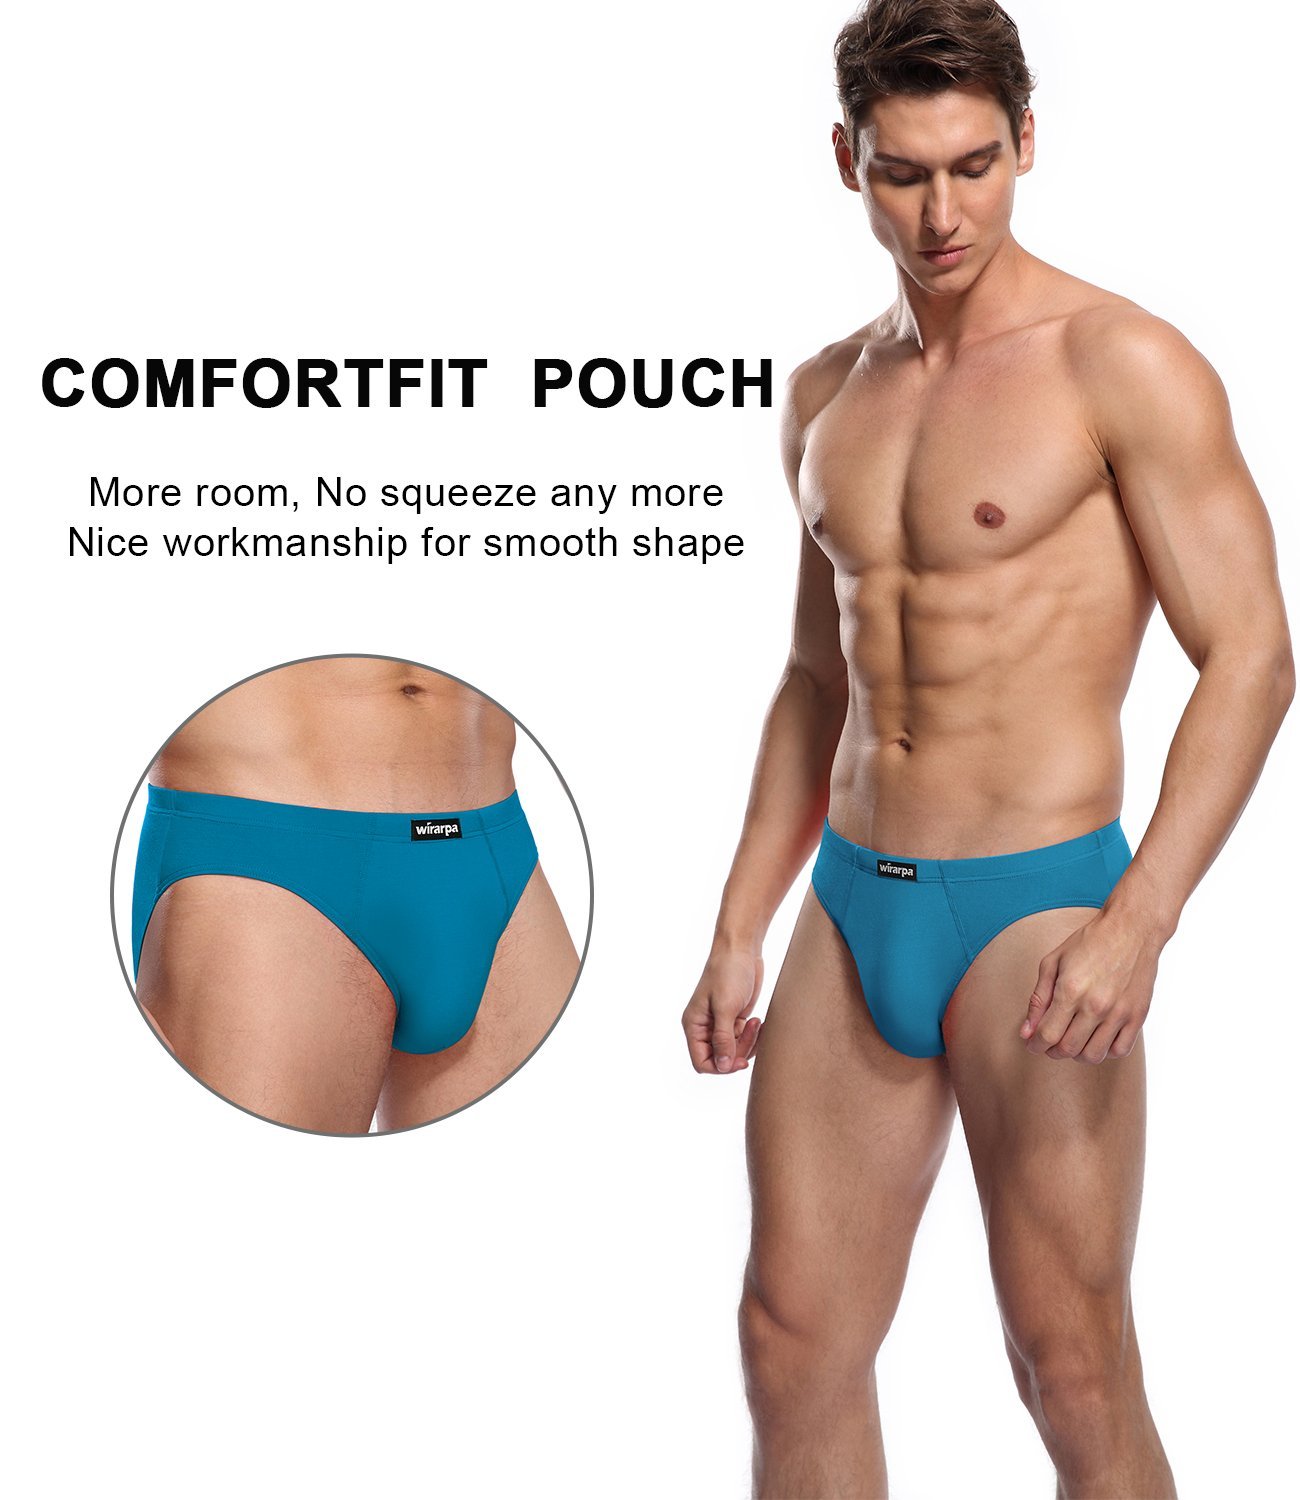  wirarpa Men's Underwear 4 Pack Stretch Modal Microfiber Trunks  Soft Waistband Short Leg, Small 1401-4p-print Design : Clothing, Shoes &  Jewelry